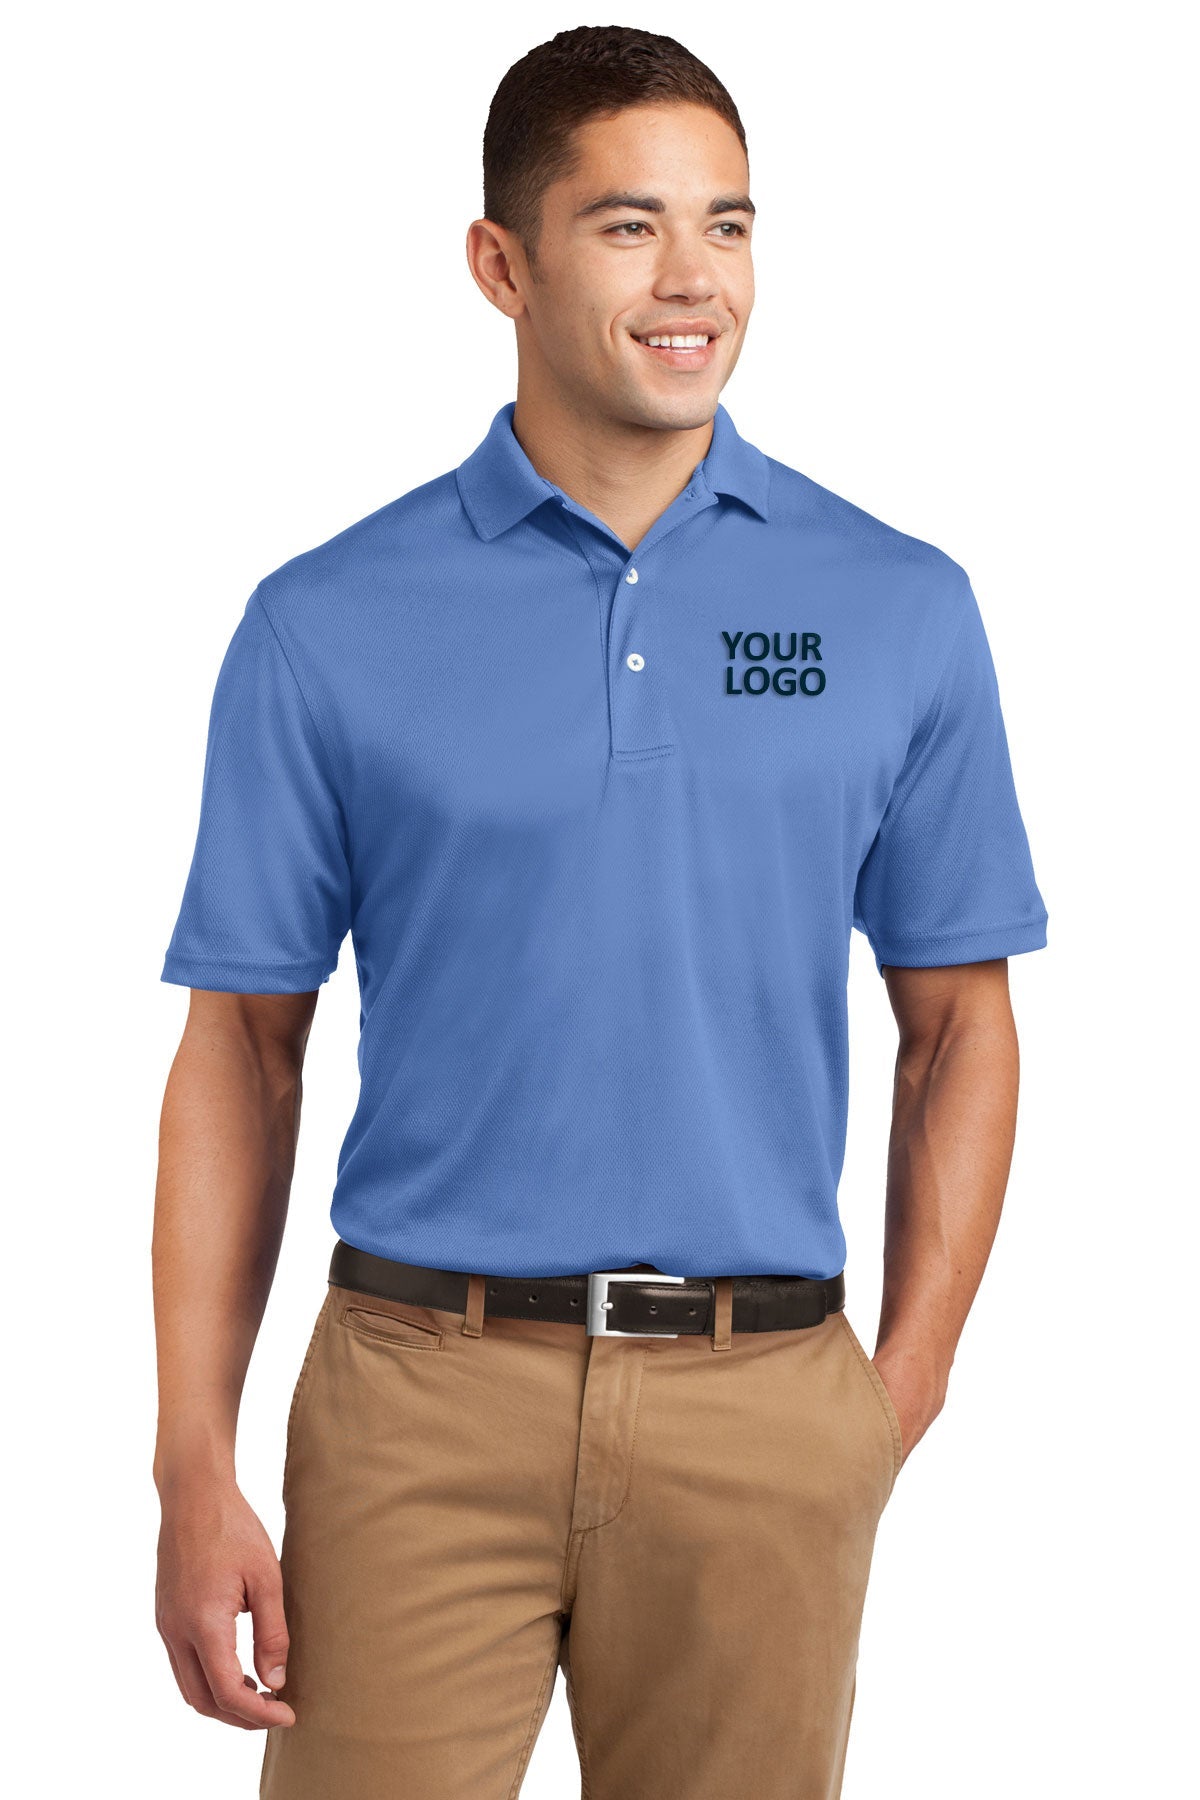 Sport-Tek Blueberry TK469 quality polo shirts with company logo